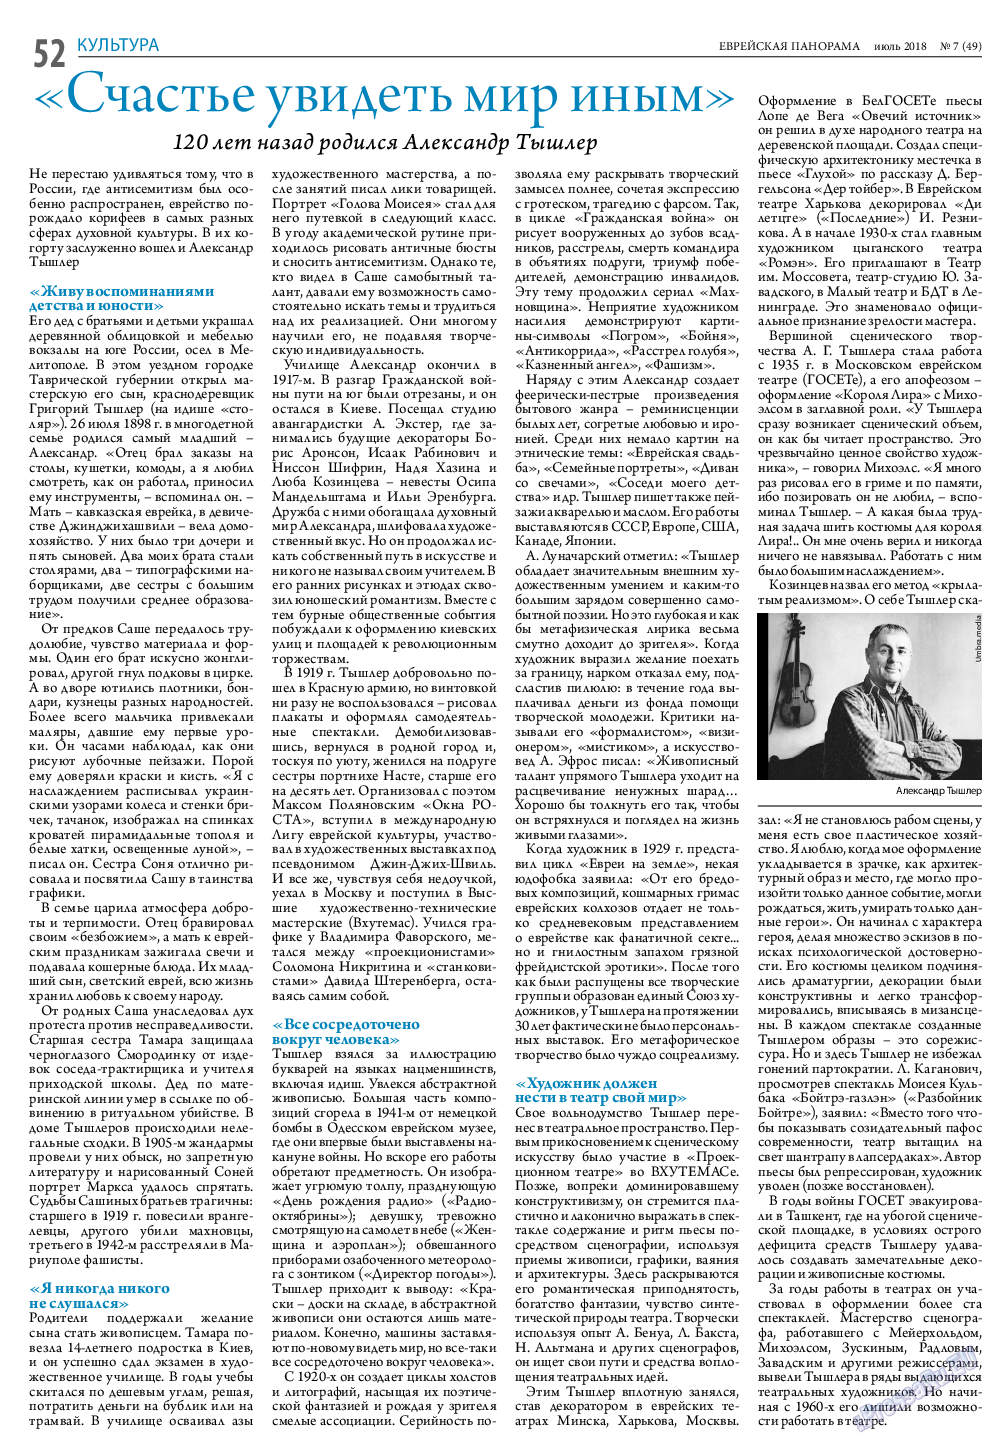 Еврейская панорама, газета. 2018 №7 стр.52